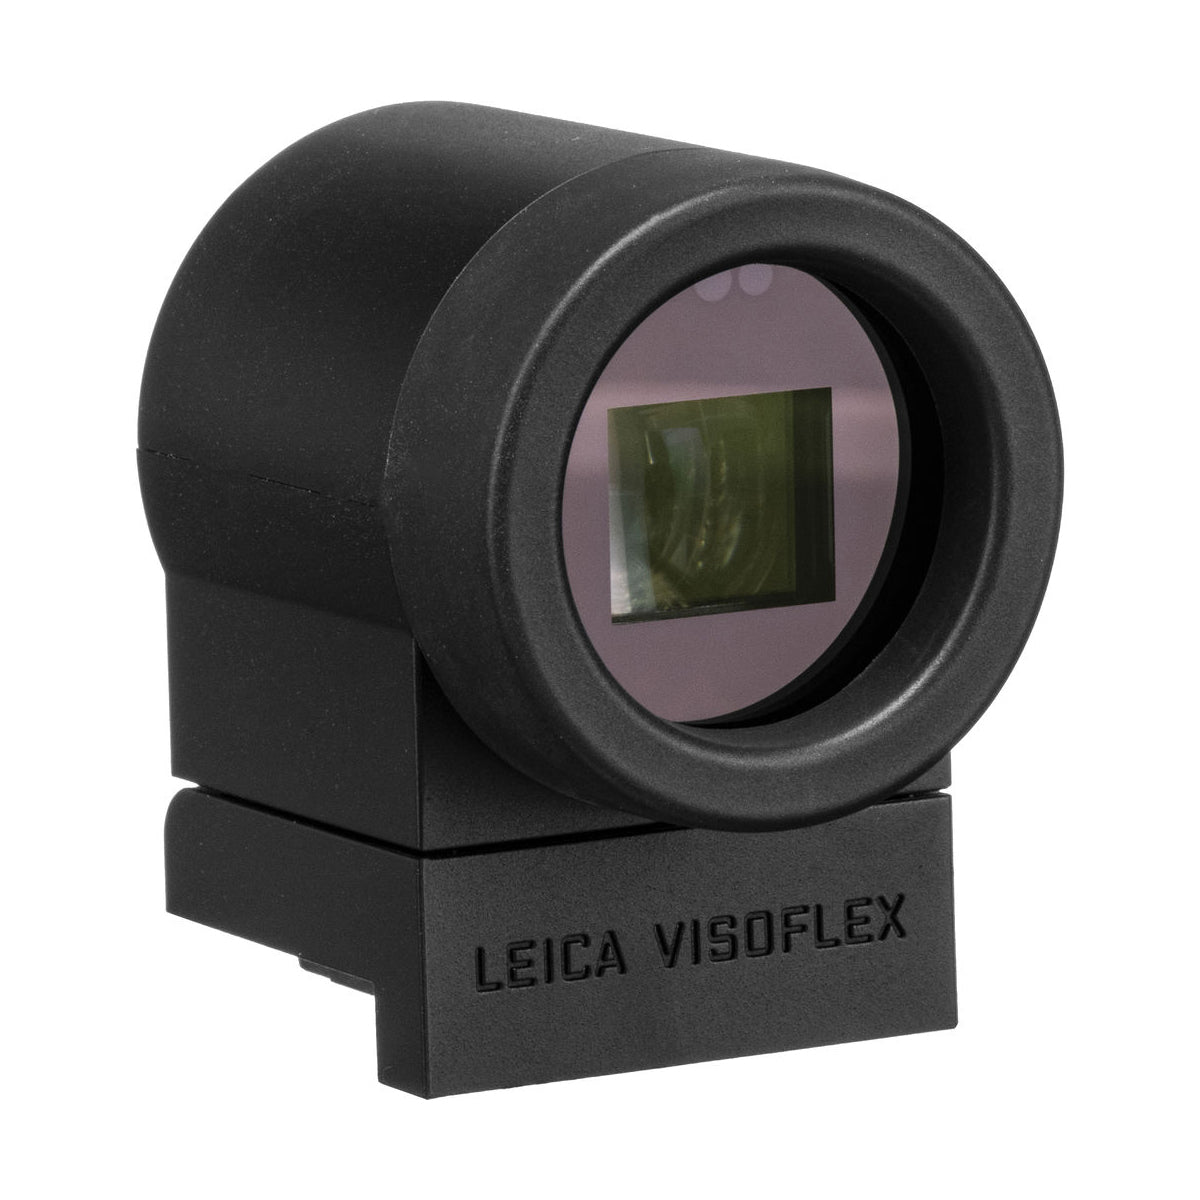 Leica Visoflex (Type 020) Viewfinder (Leica T, M10)